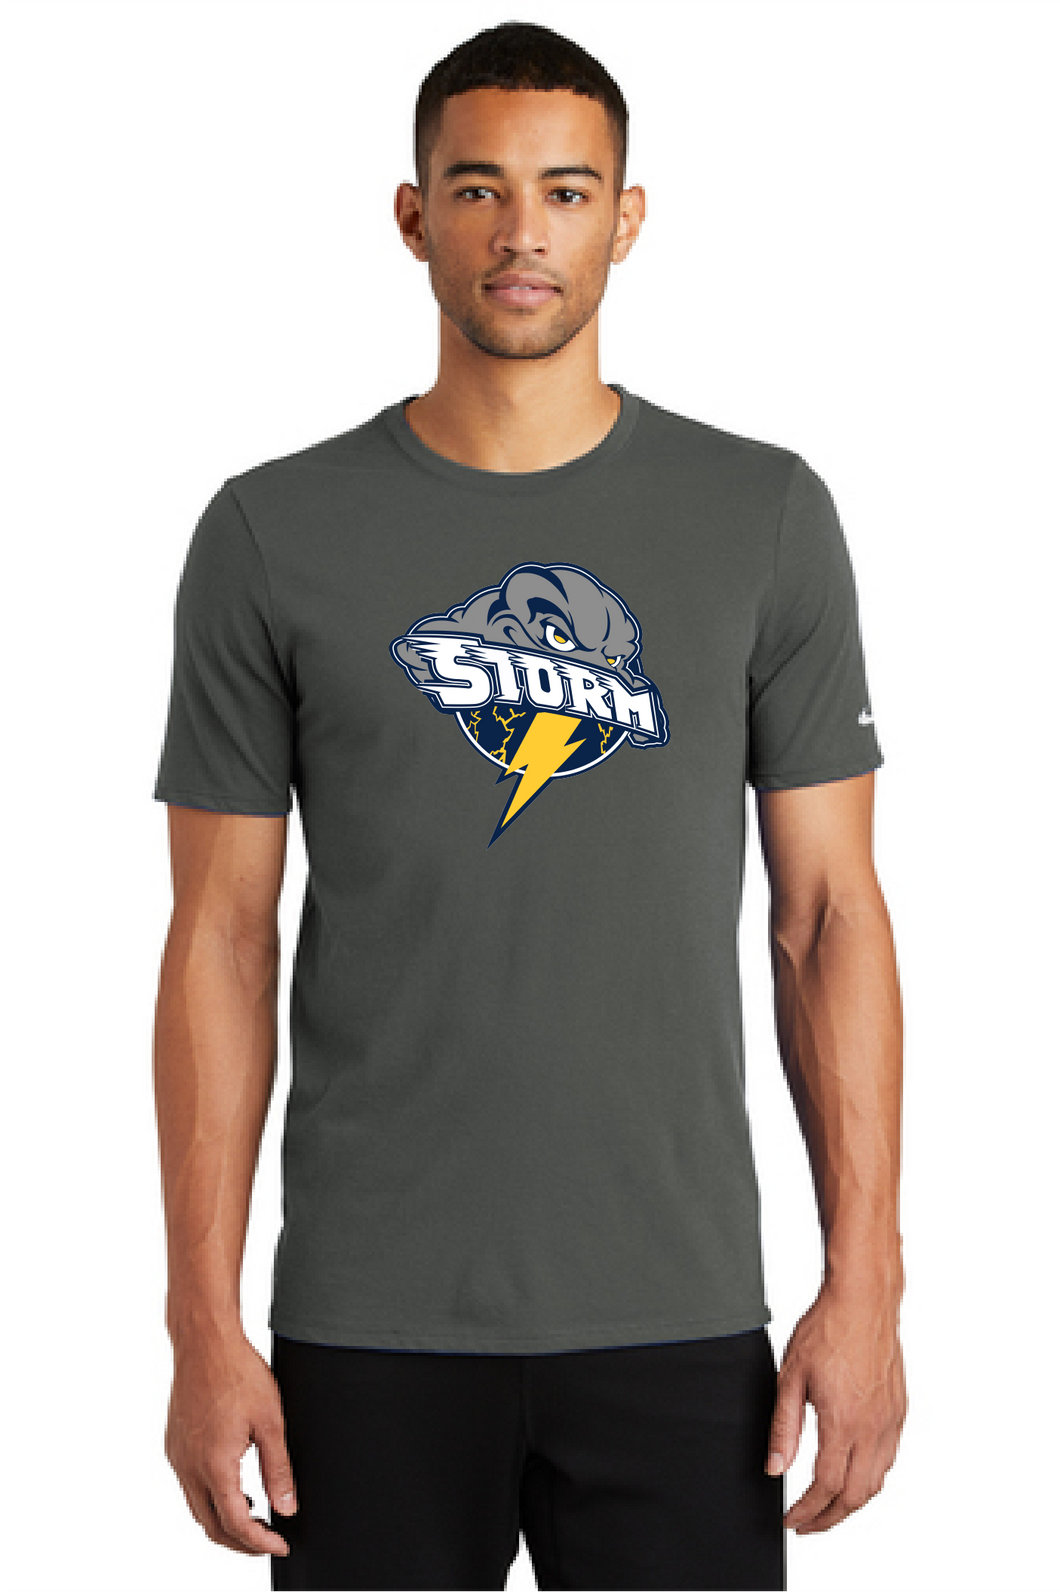 Storm Nike T-shirt